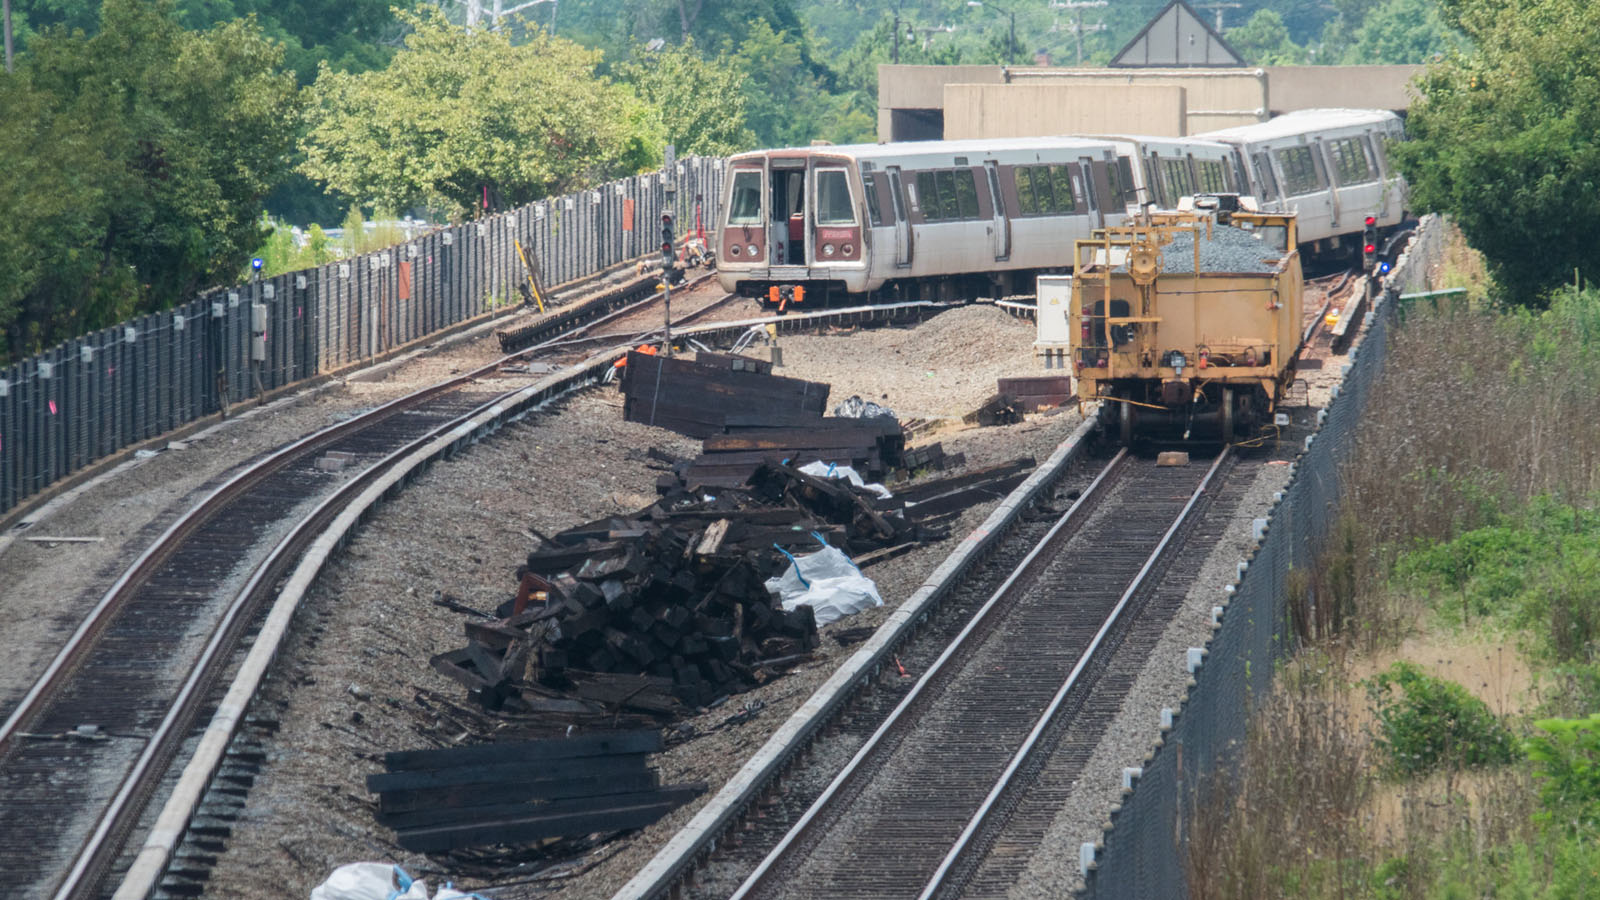 The derailed Silver Line train outside the East Falls Church Metro station. (John Sonderman)